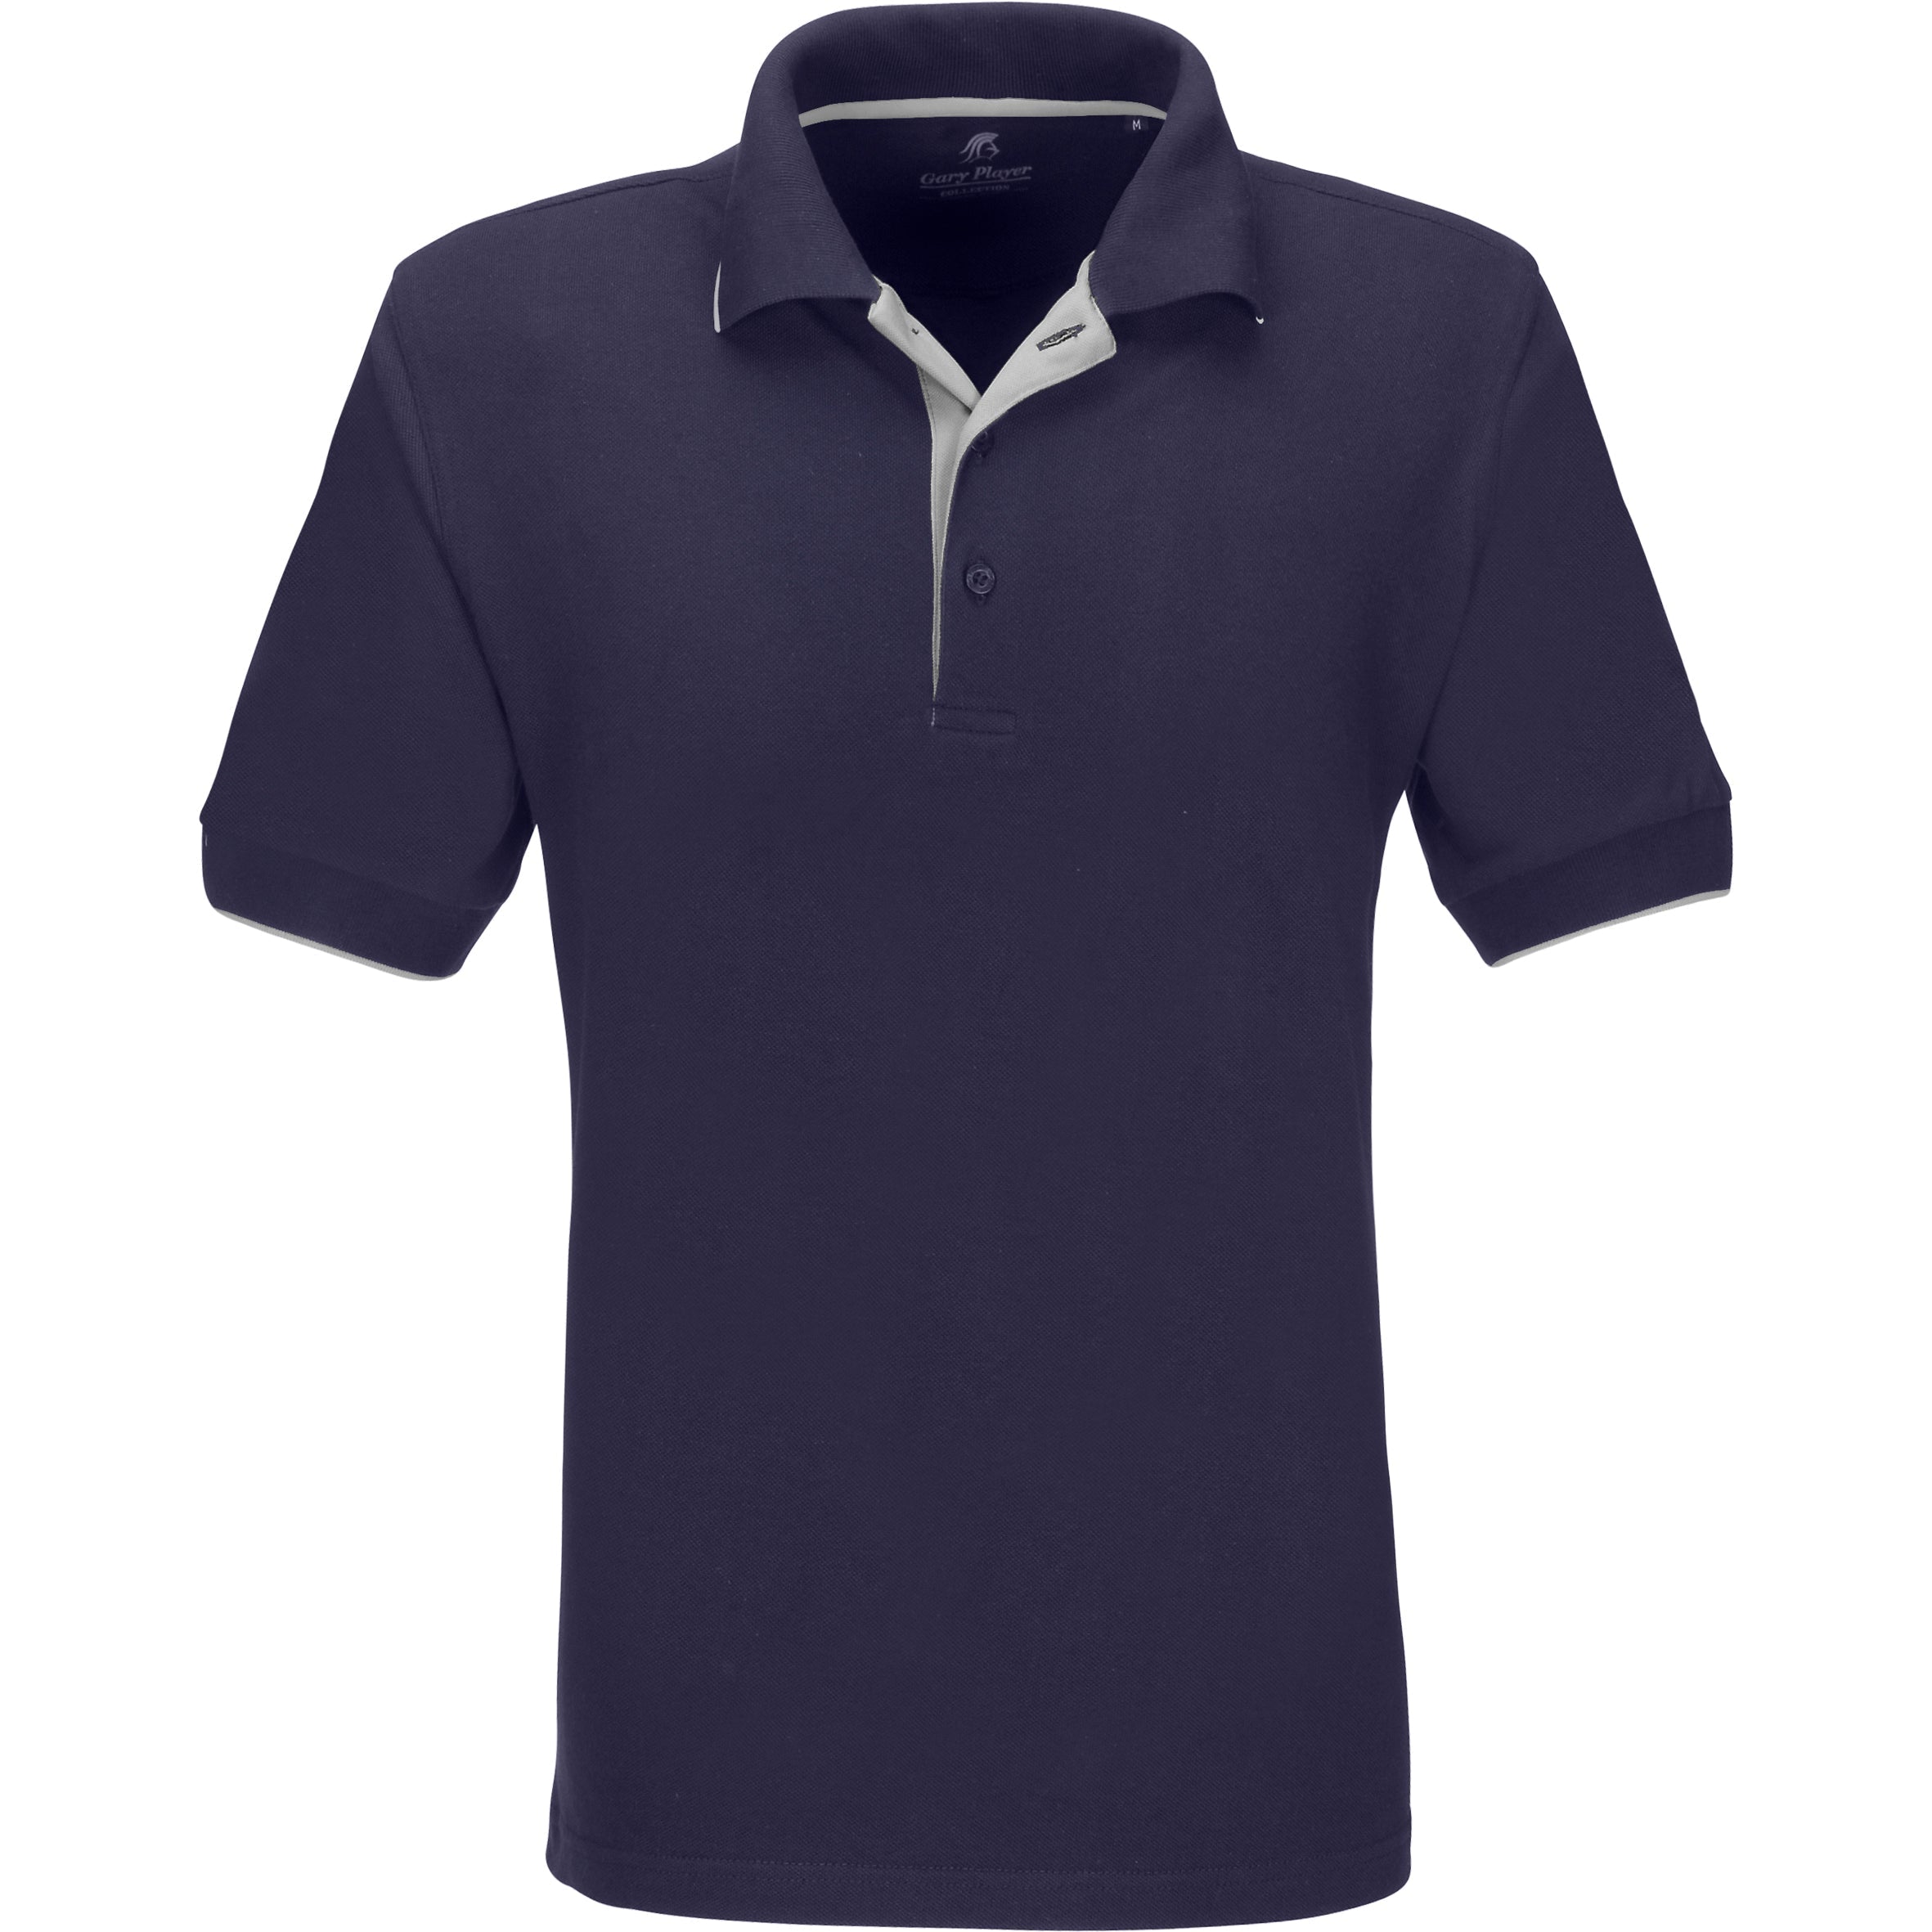 Mens Wentworth Golf Shirt - White Only-L-Navy-N